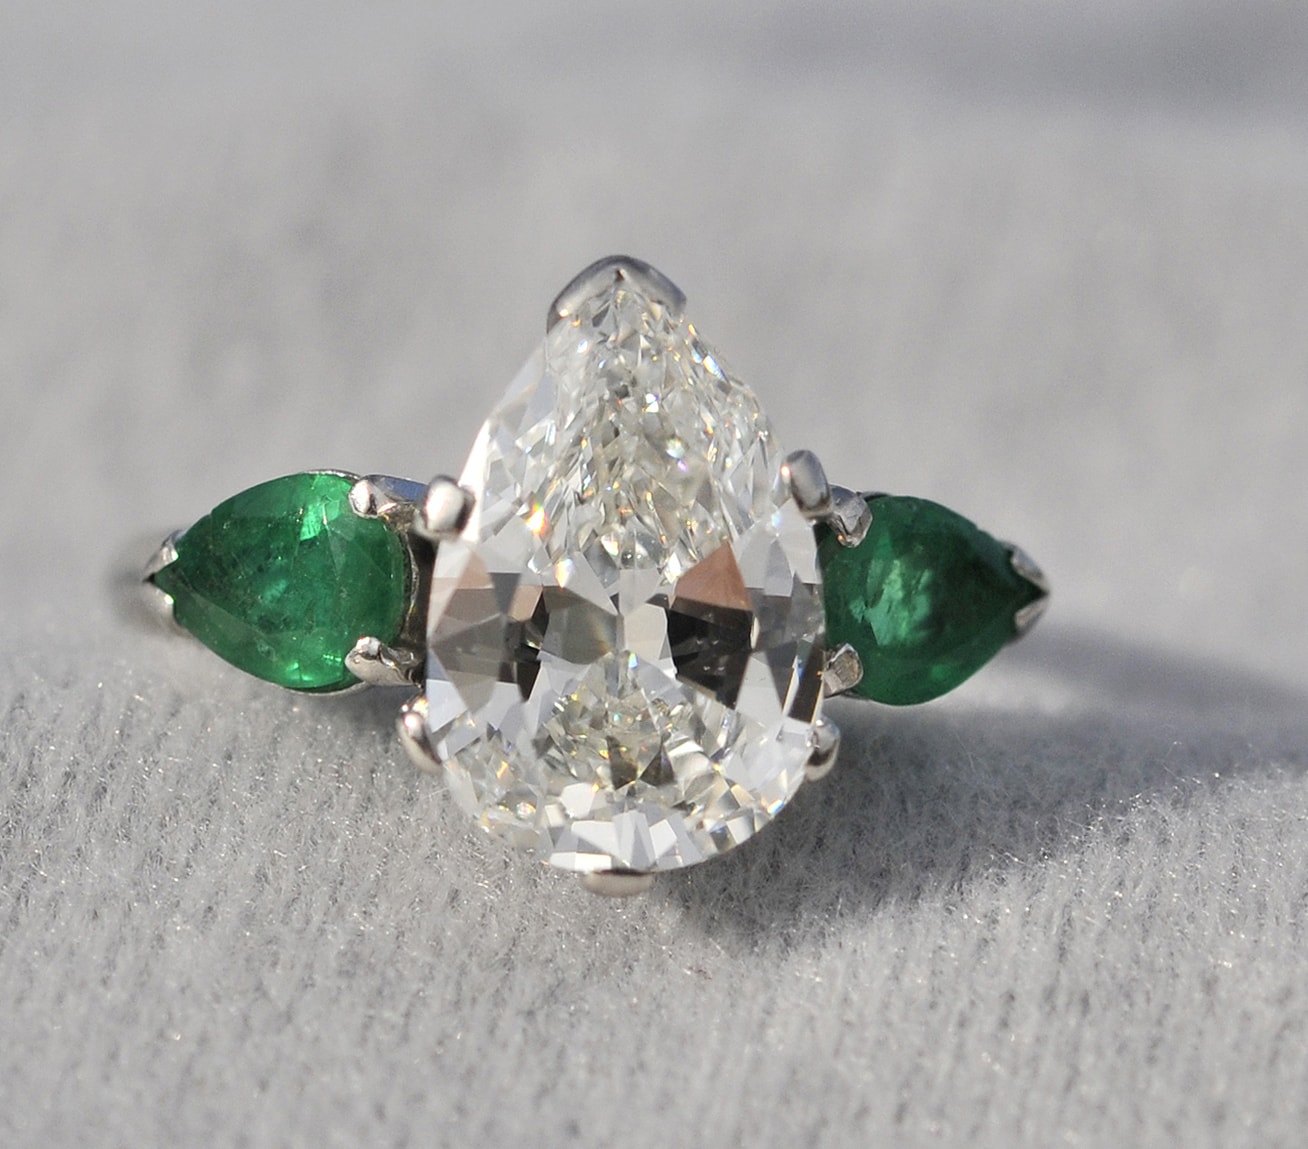 5.5 carat diamond ring $85,000